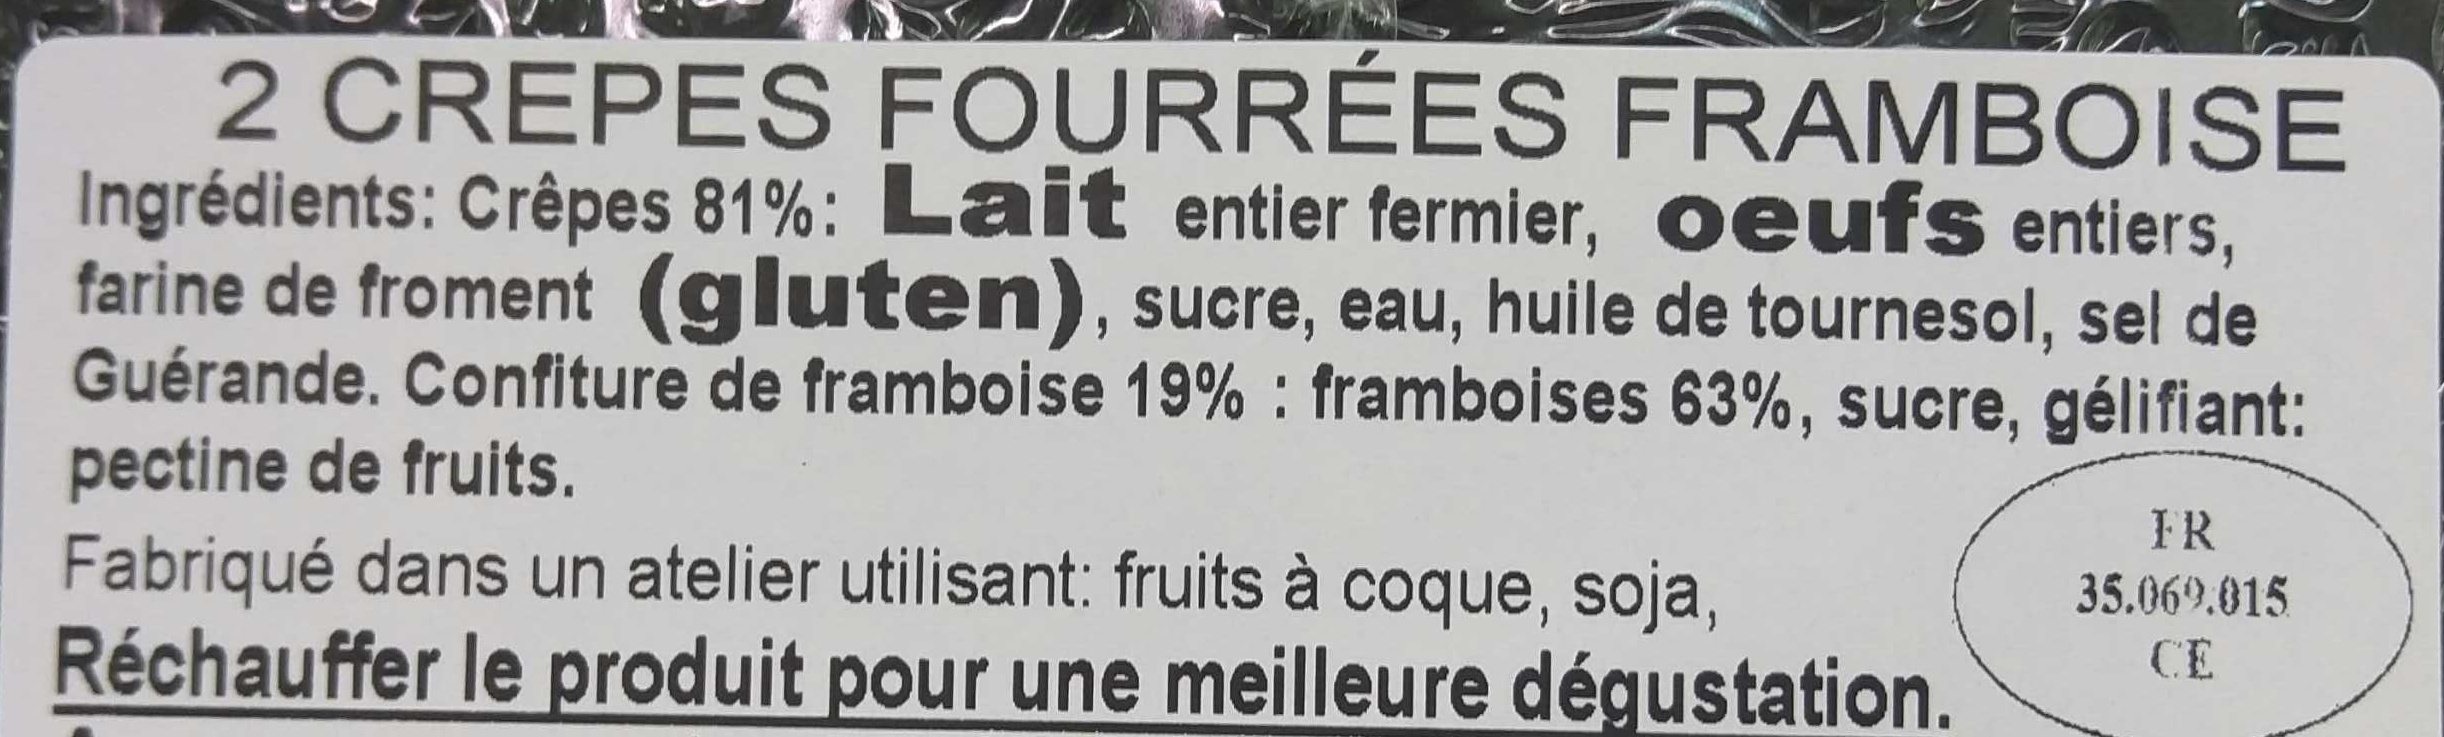 2 crêpes framboise - Ingredients - fr